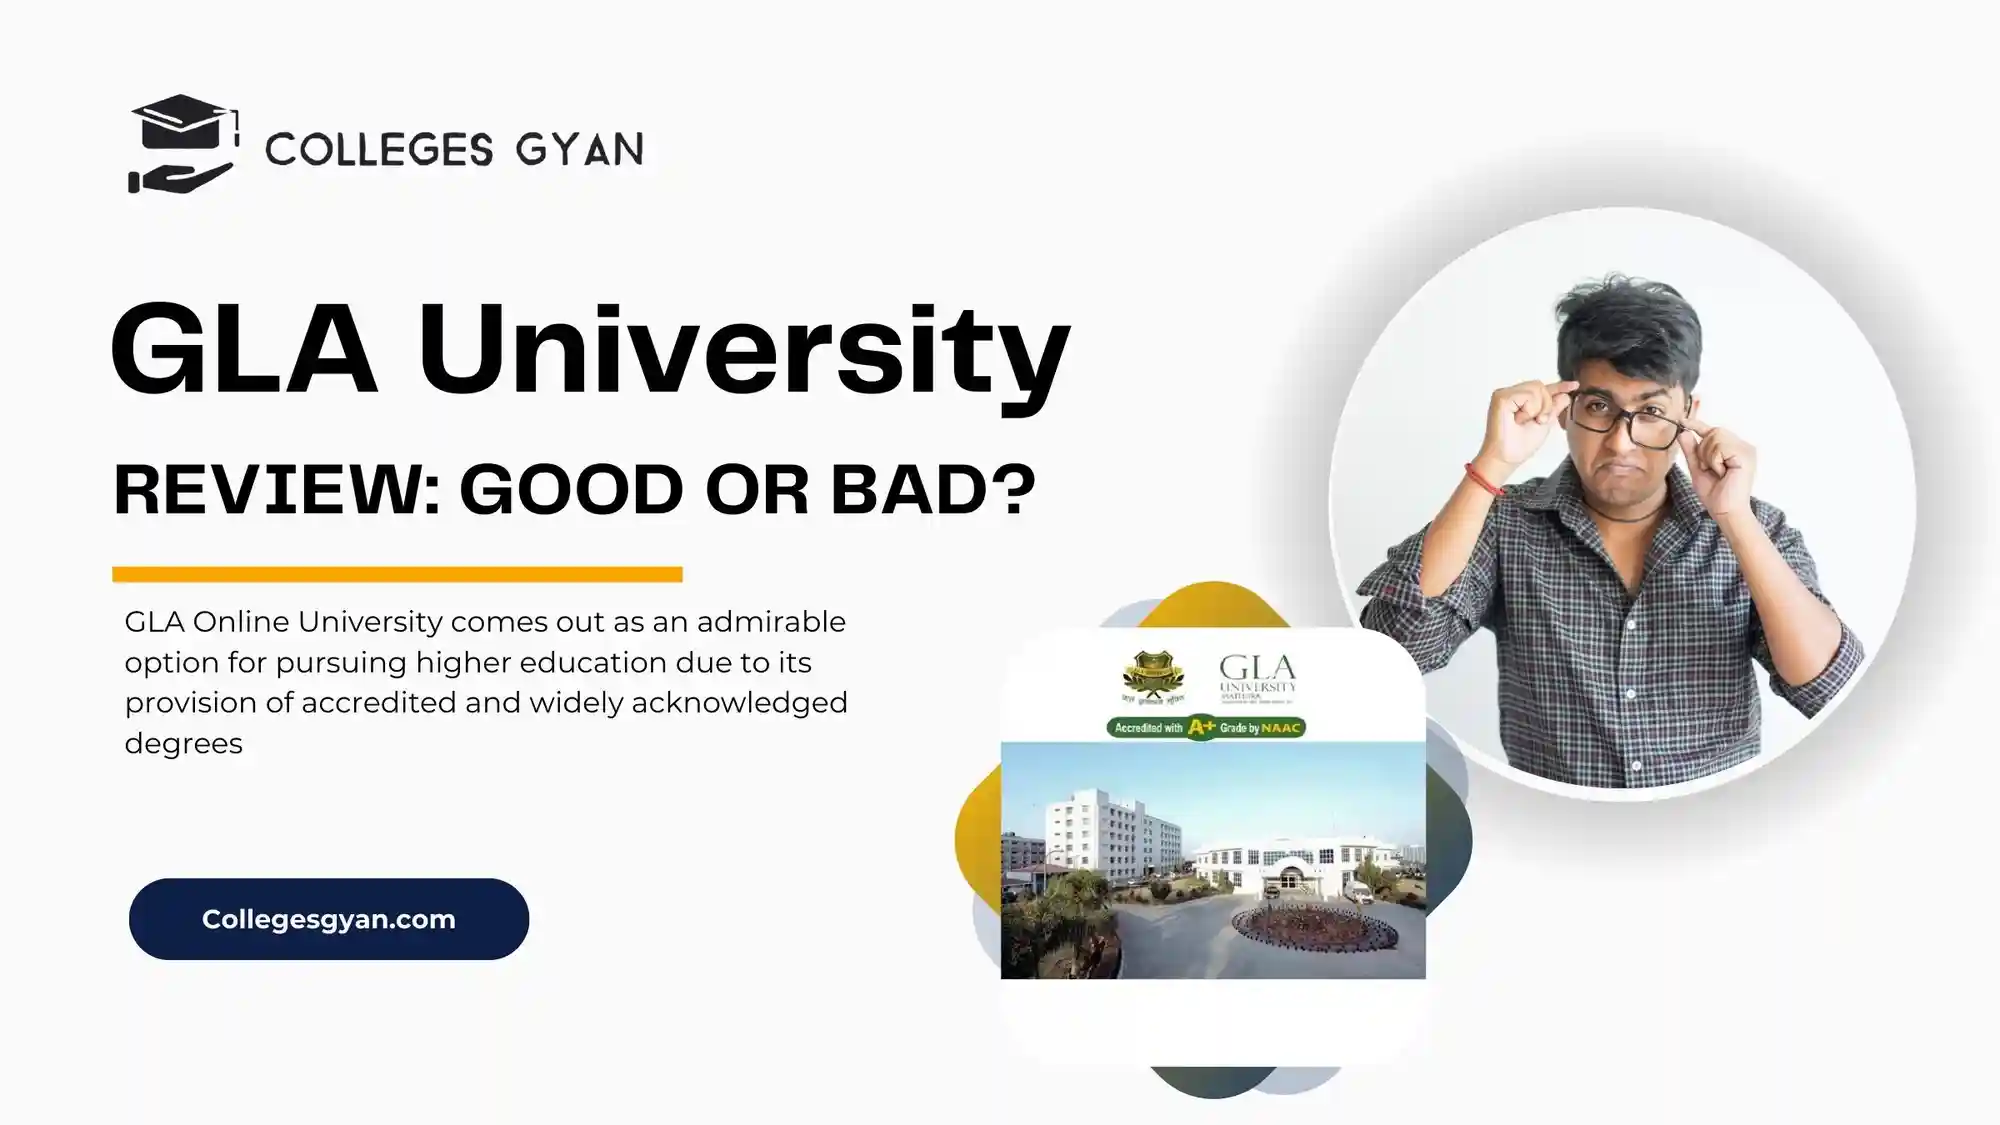 GLA University Online Review: Good or Bad?